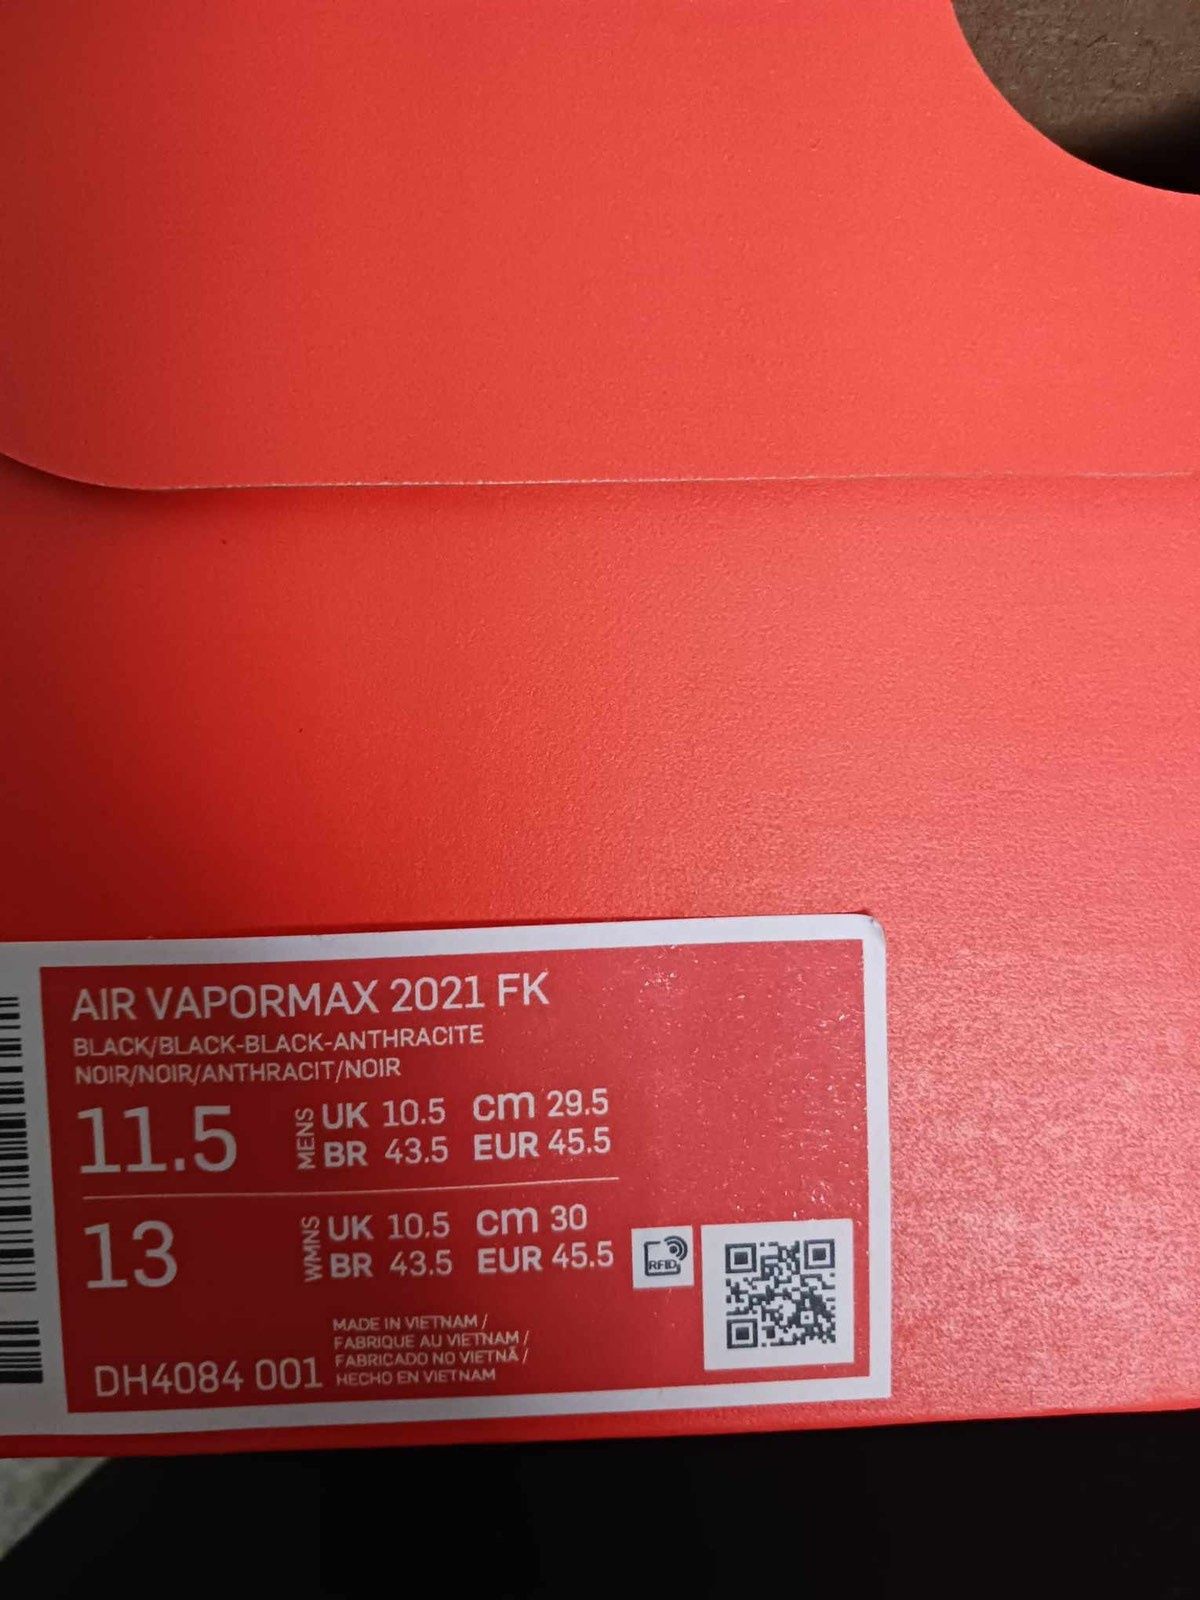 Nike Air Vapormax